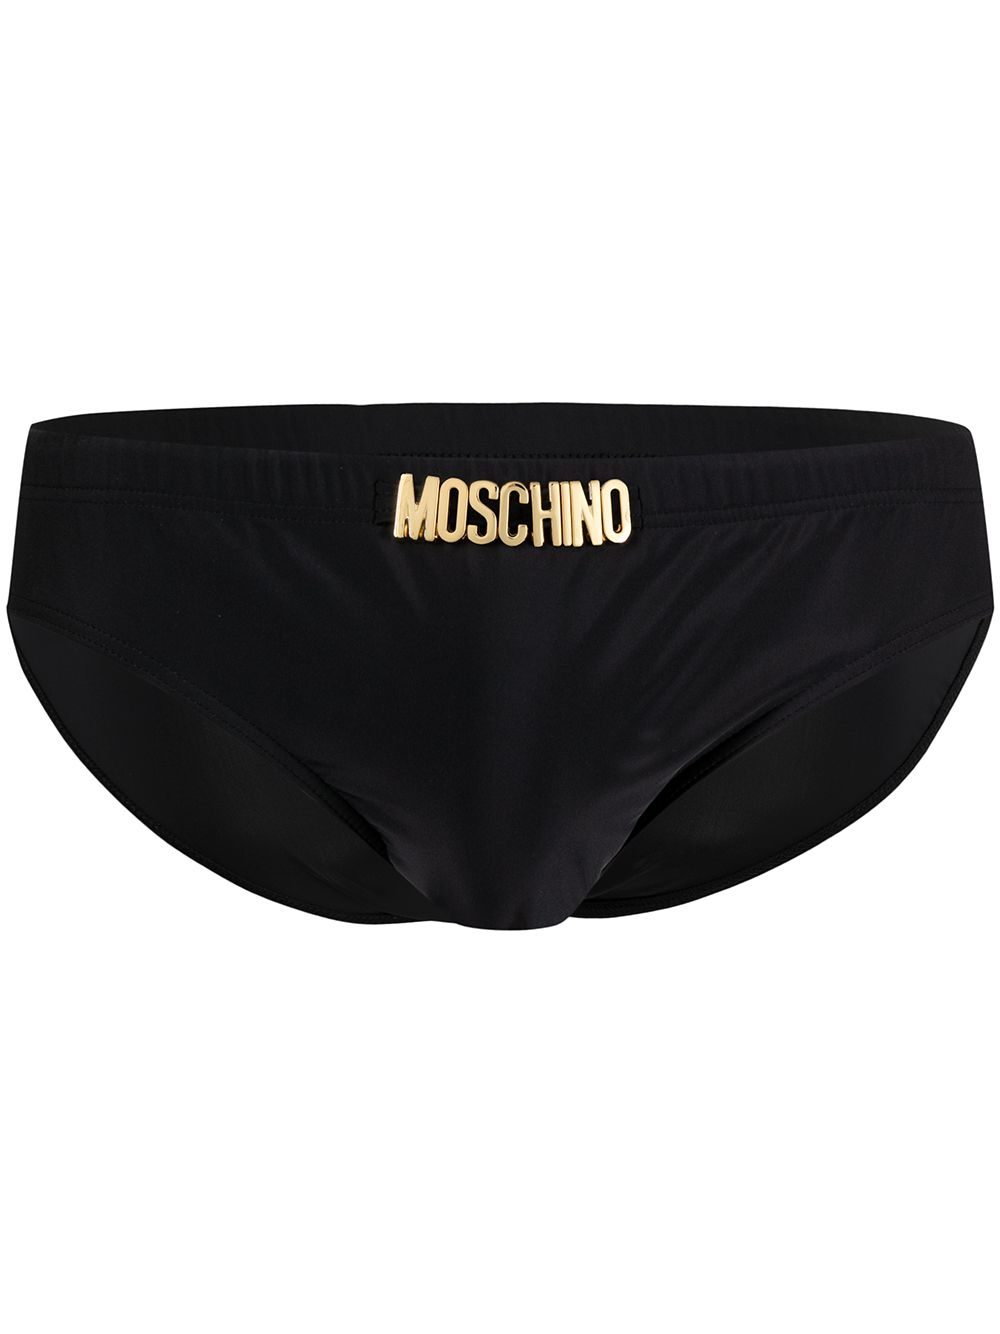 фото Moschino плавки с логотипом